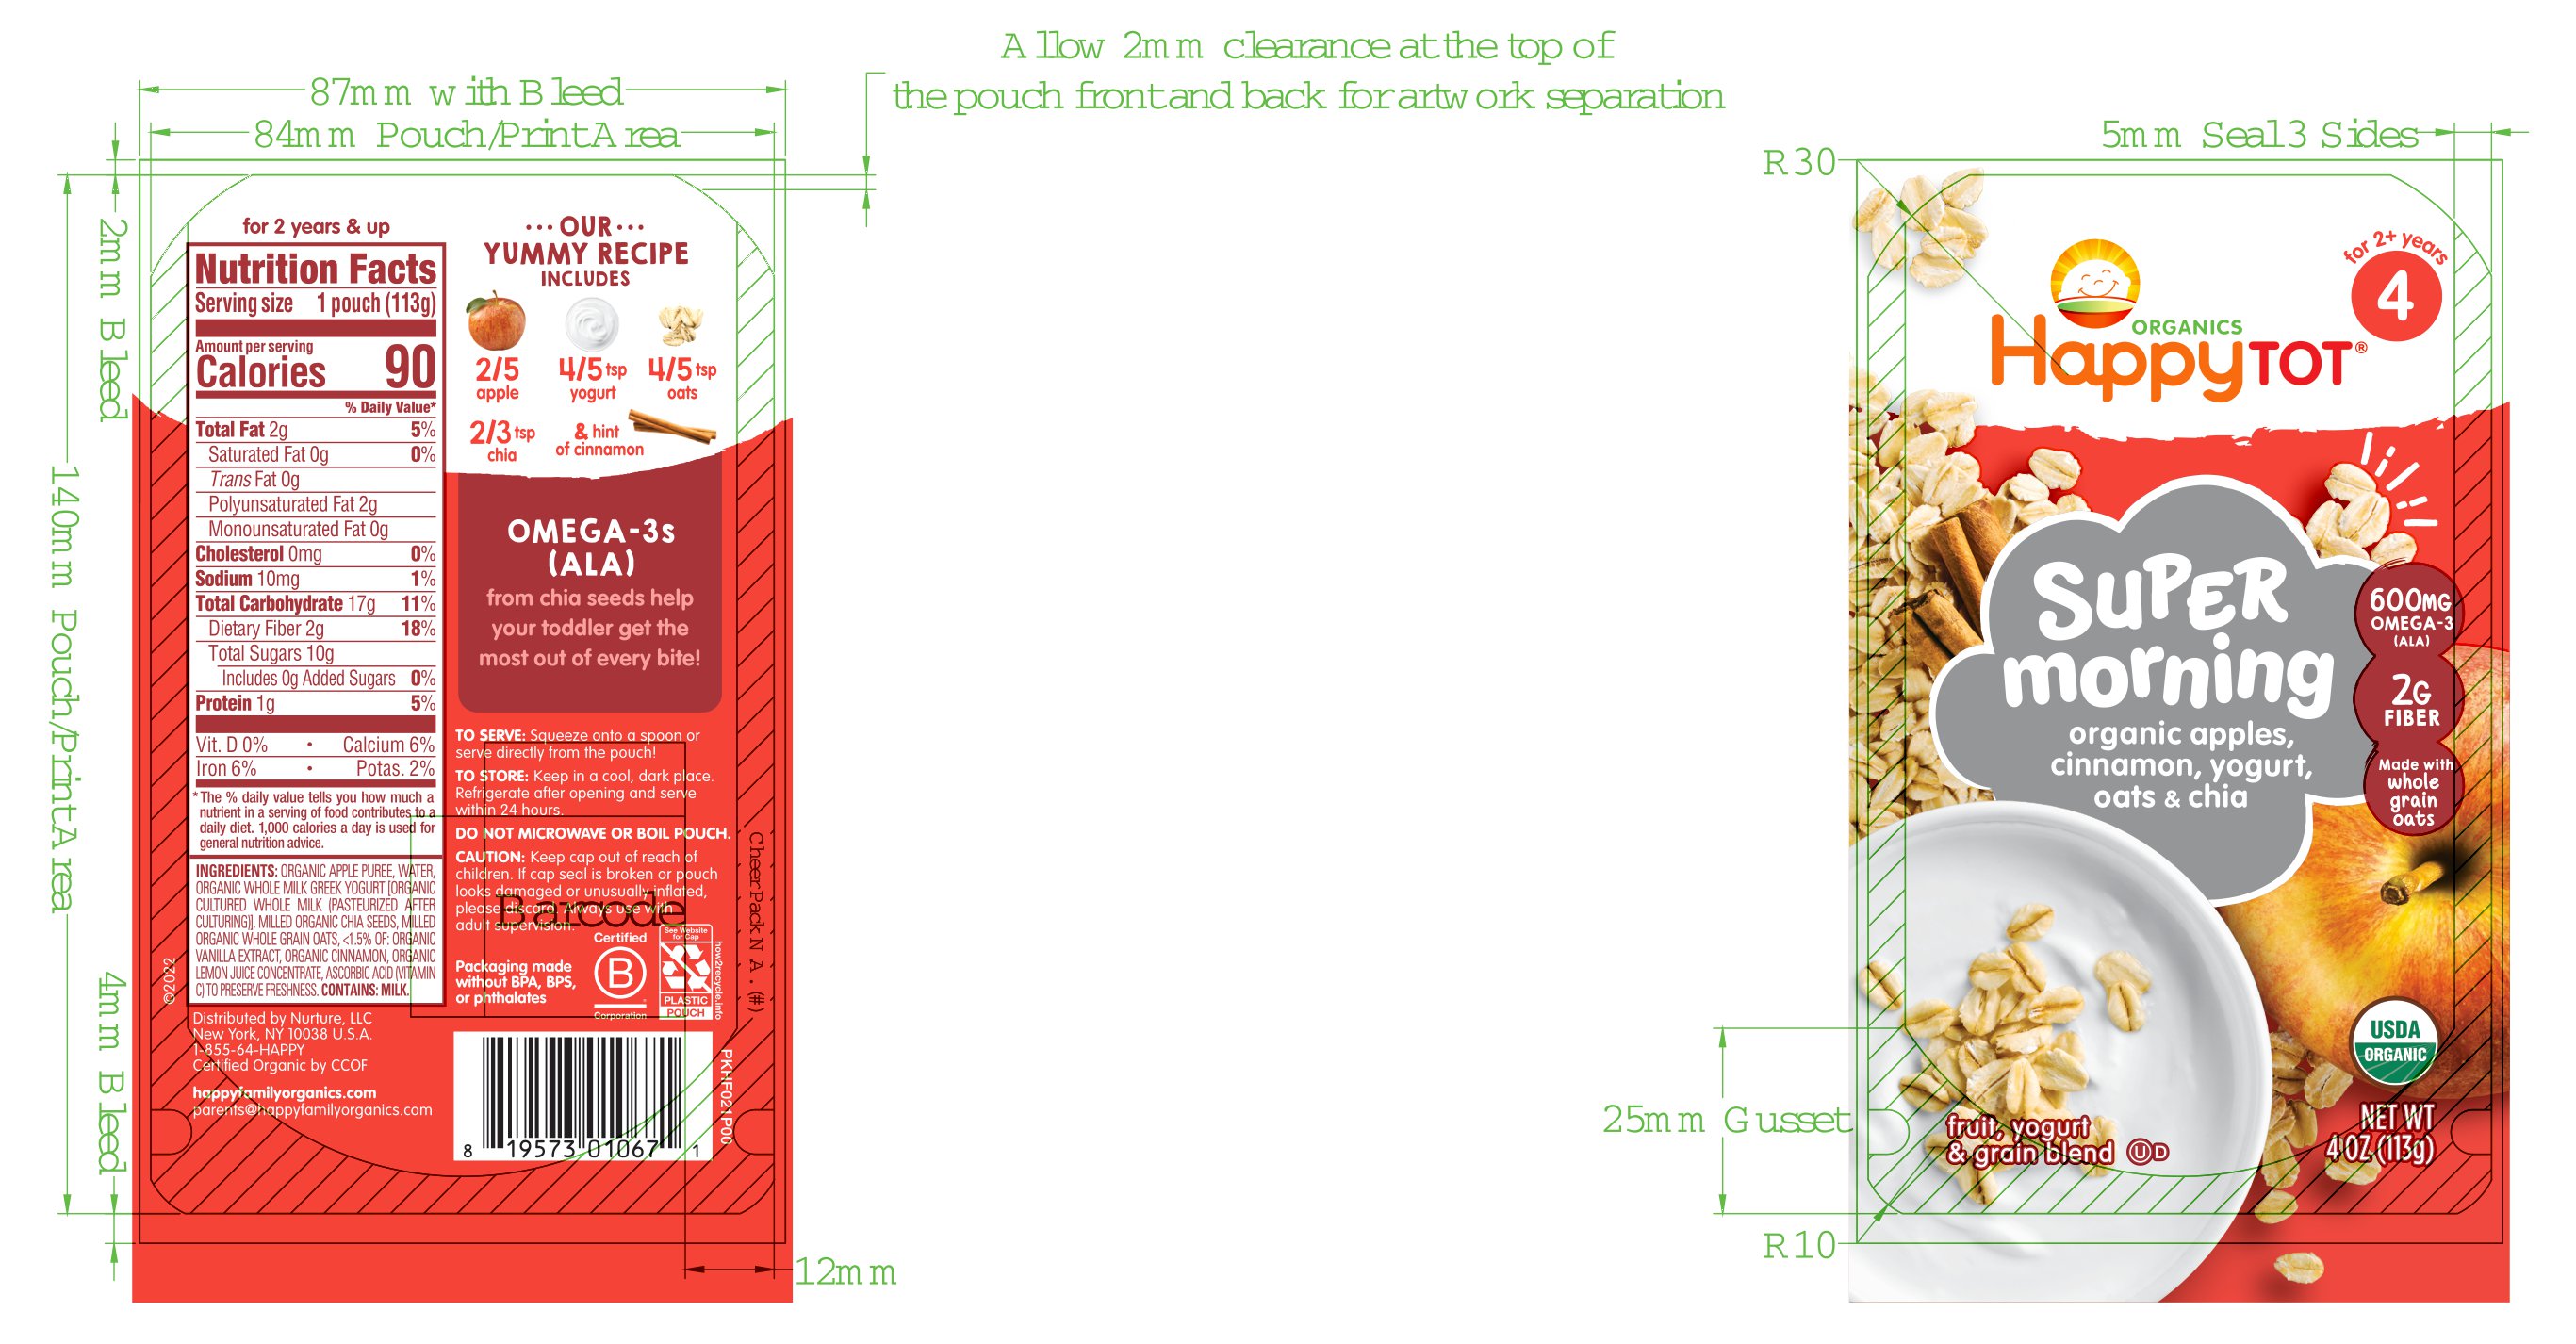 Happy Tot S4 - Super Morning Organic Apples Cinnamon Yogurt & Oats 4Oz pouch 16 units per case 4.0 oz Product Label